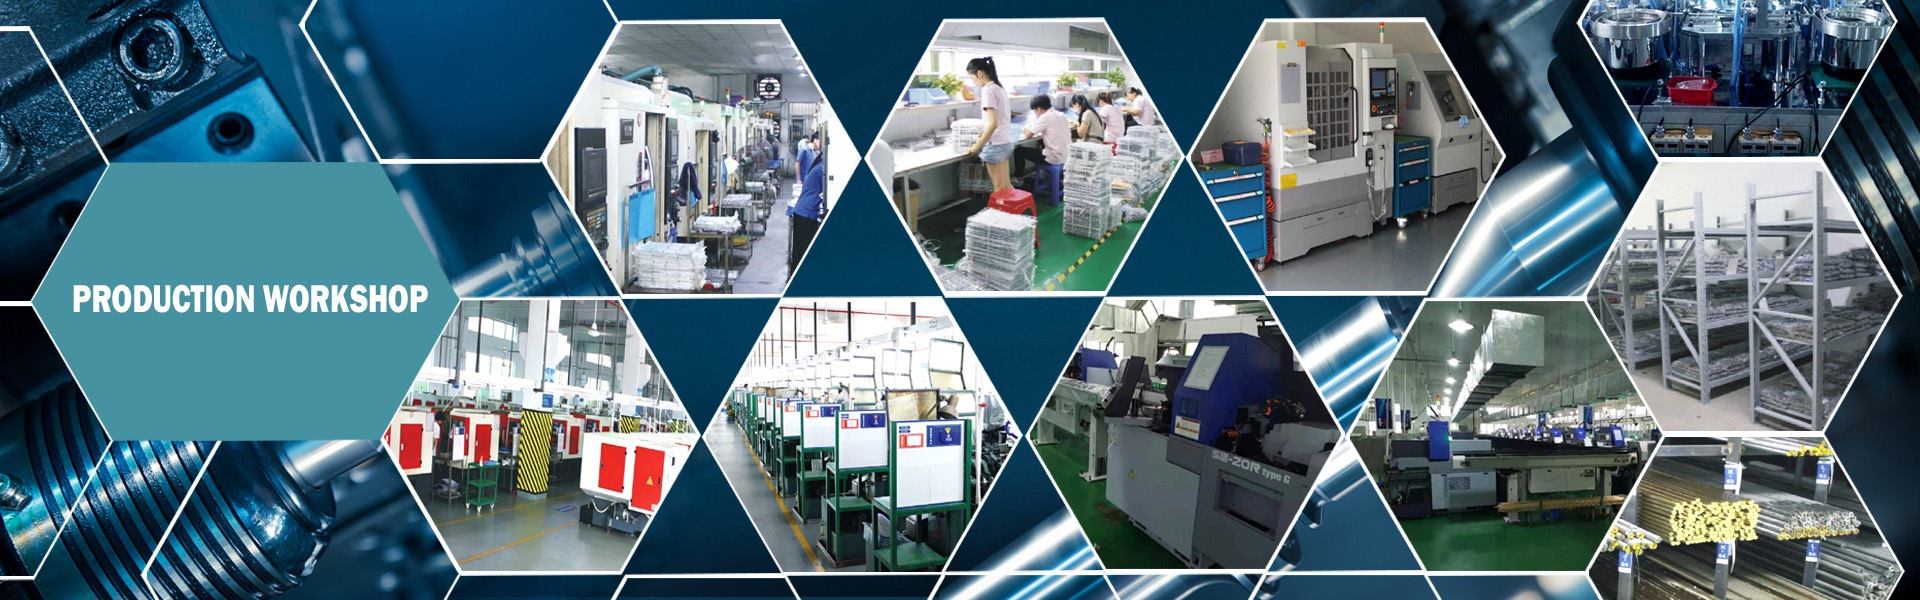 precisionshårdvara, gjutning av legeringar,profilform,Dongguan Xililai Precision Hardware Co.,Ltd.